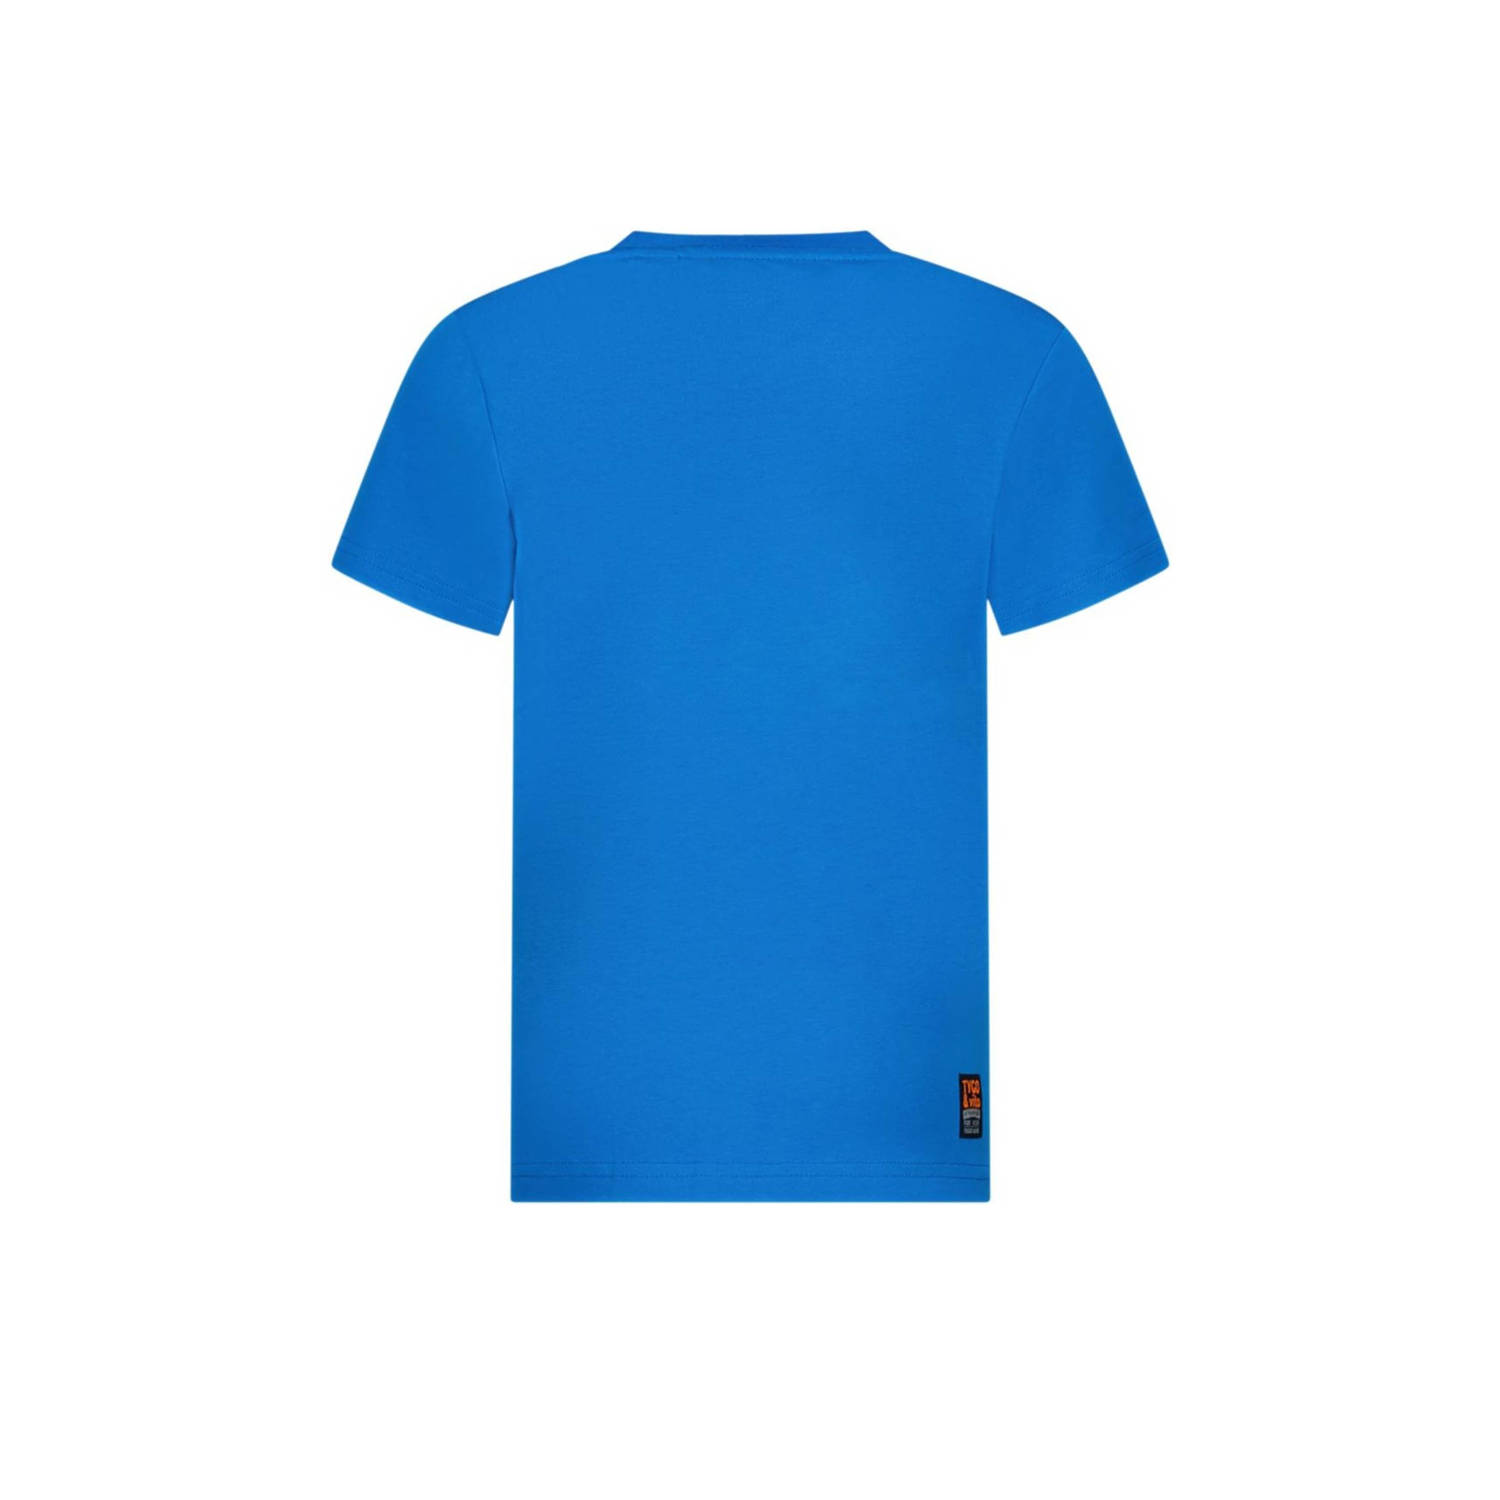 TYGO & vito T-shirt Wessel met contrastbies hardblauw